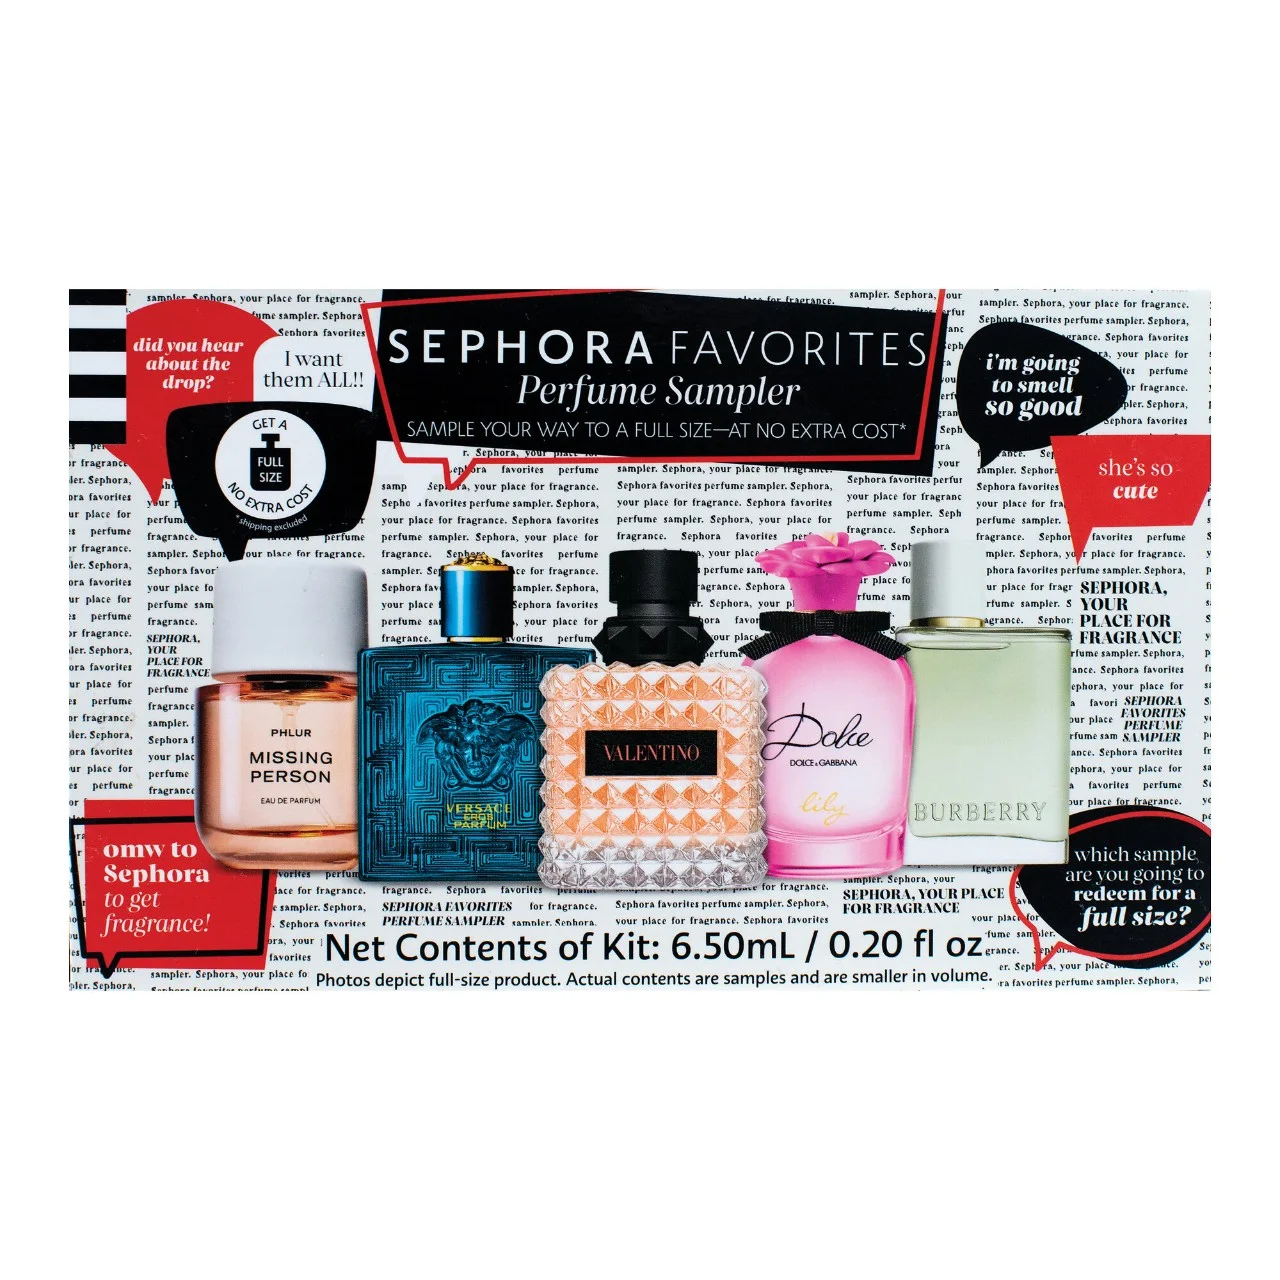 Sephora Favorites: Bestsellers Perfume Sampler Set Review